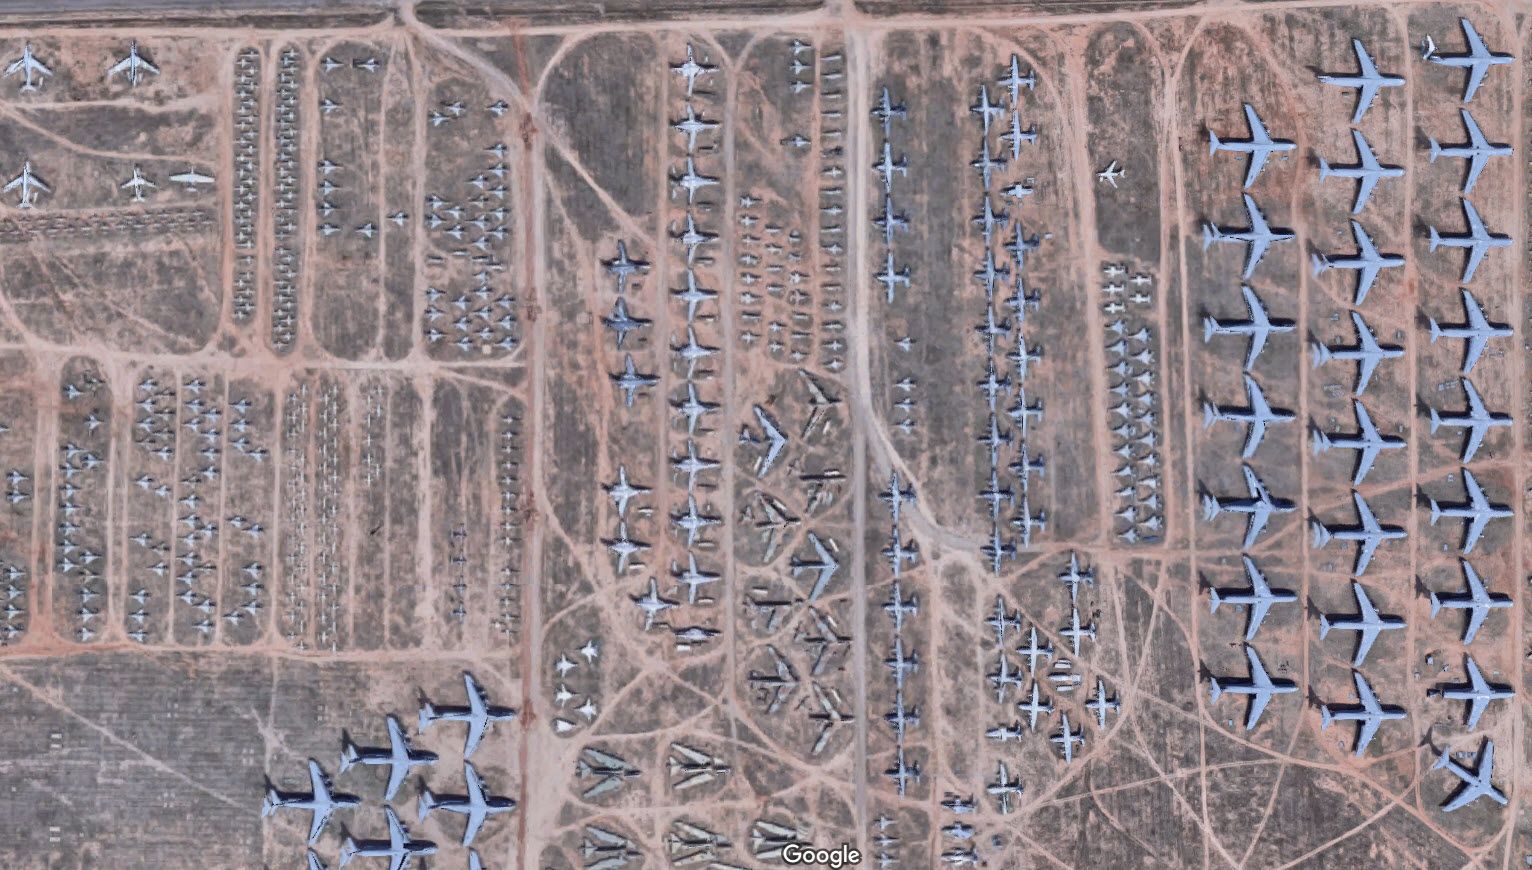 Google Maps Satellite View of Plane Graveyard